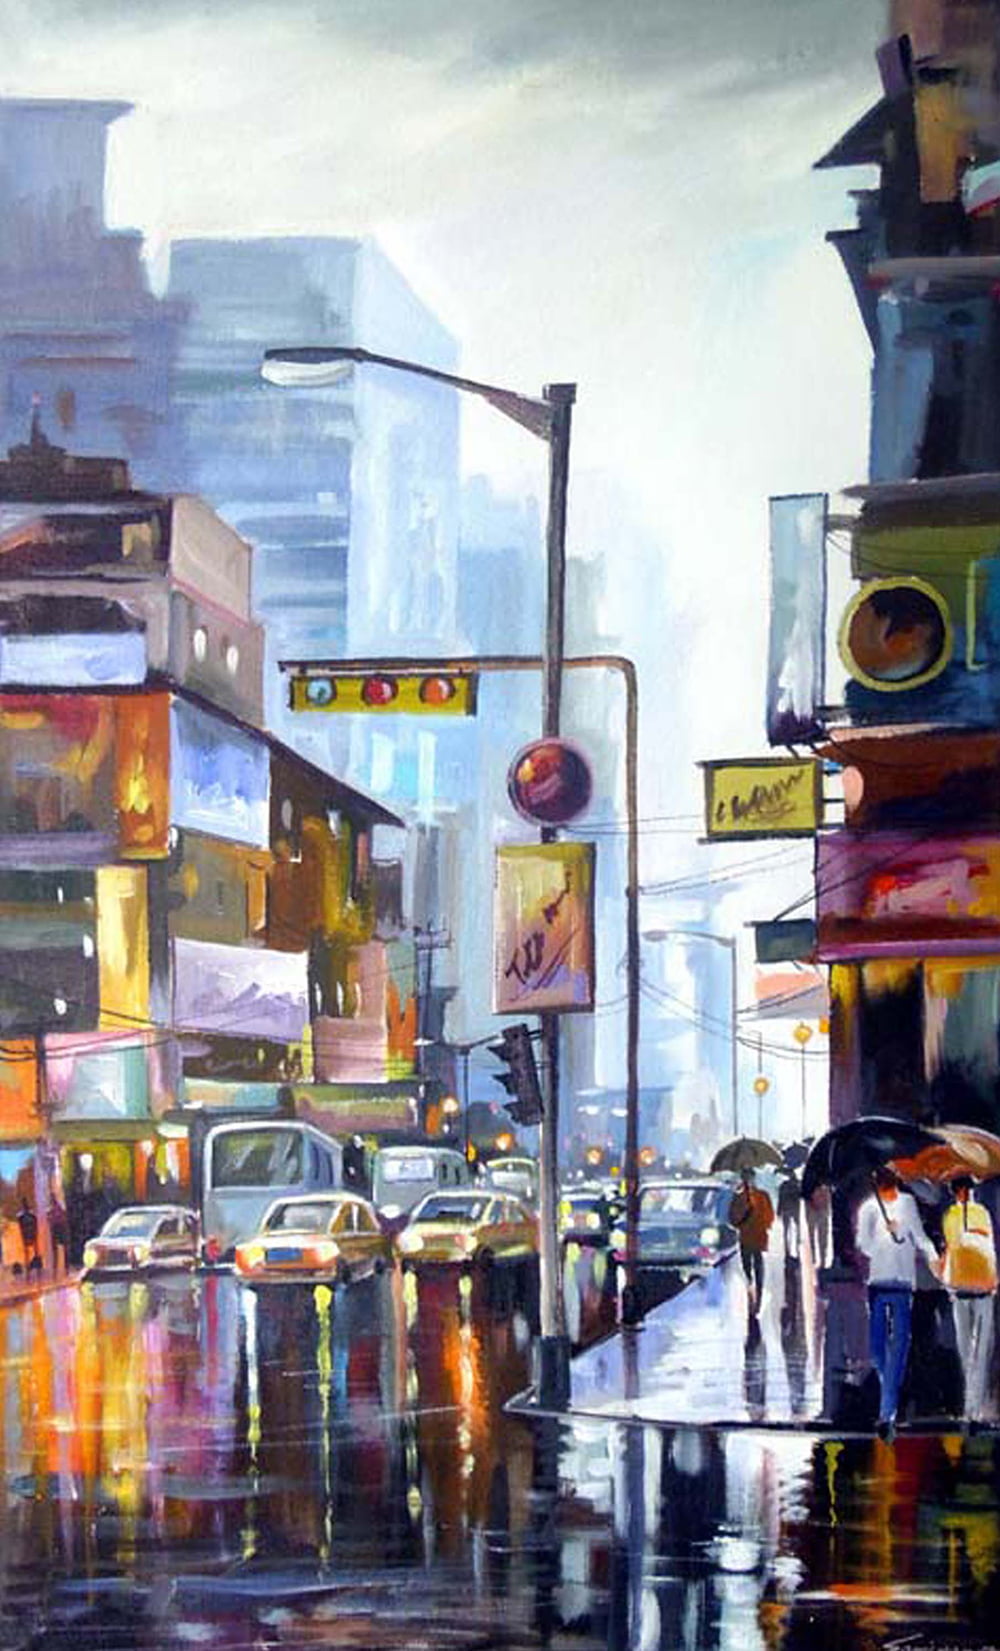 Kolkata – The Street after Rain, Samiran Sarkar (India) - Exquisite Art